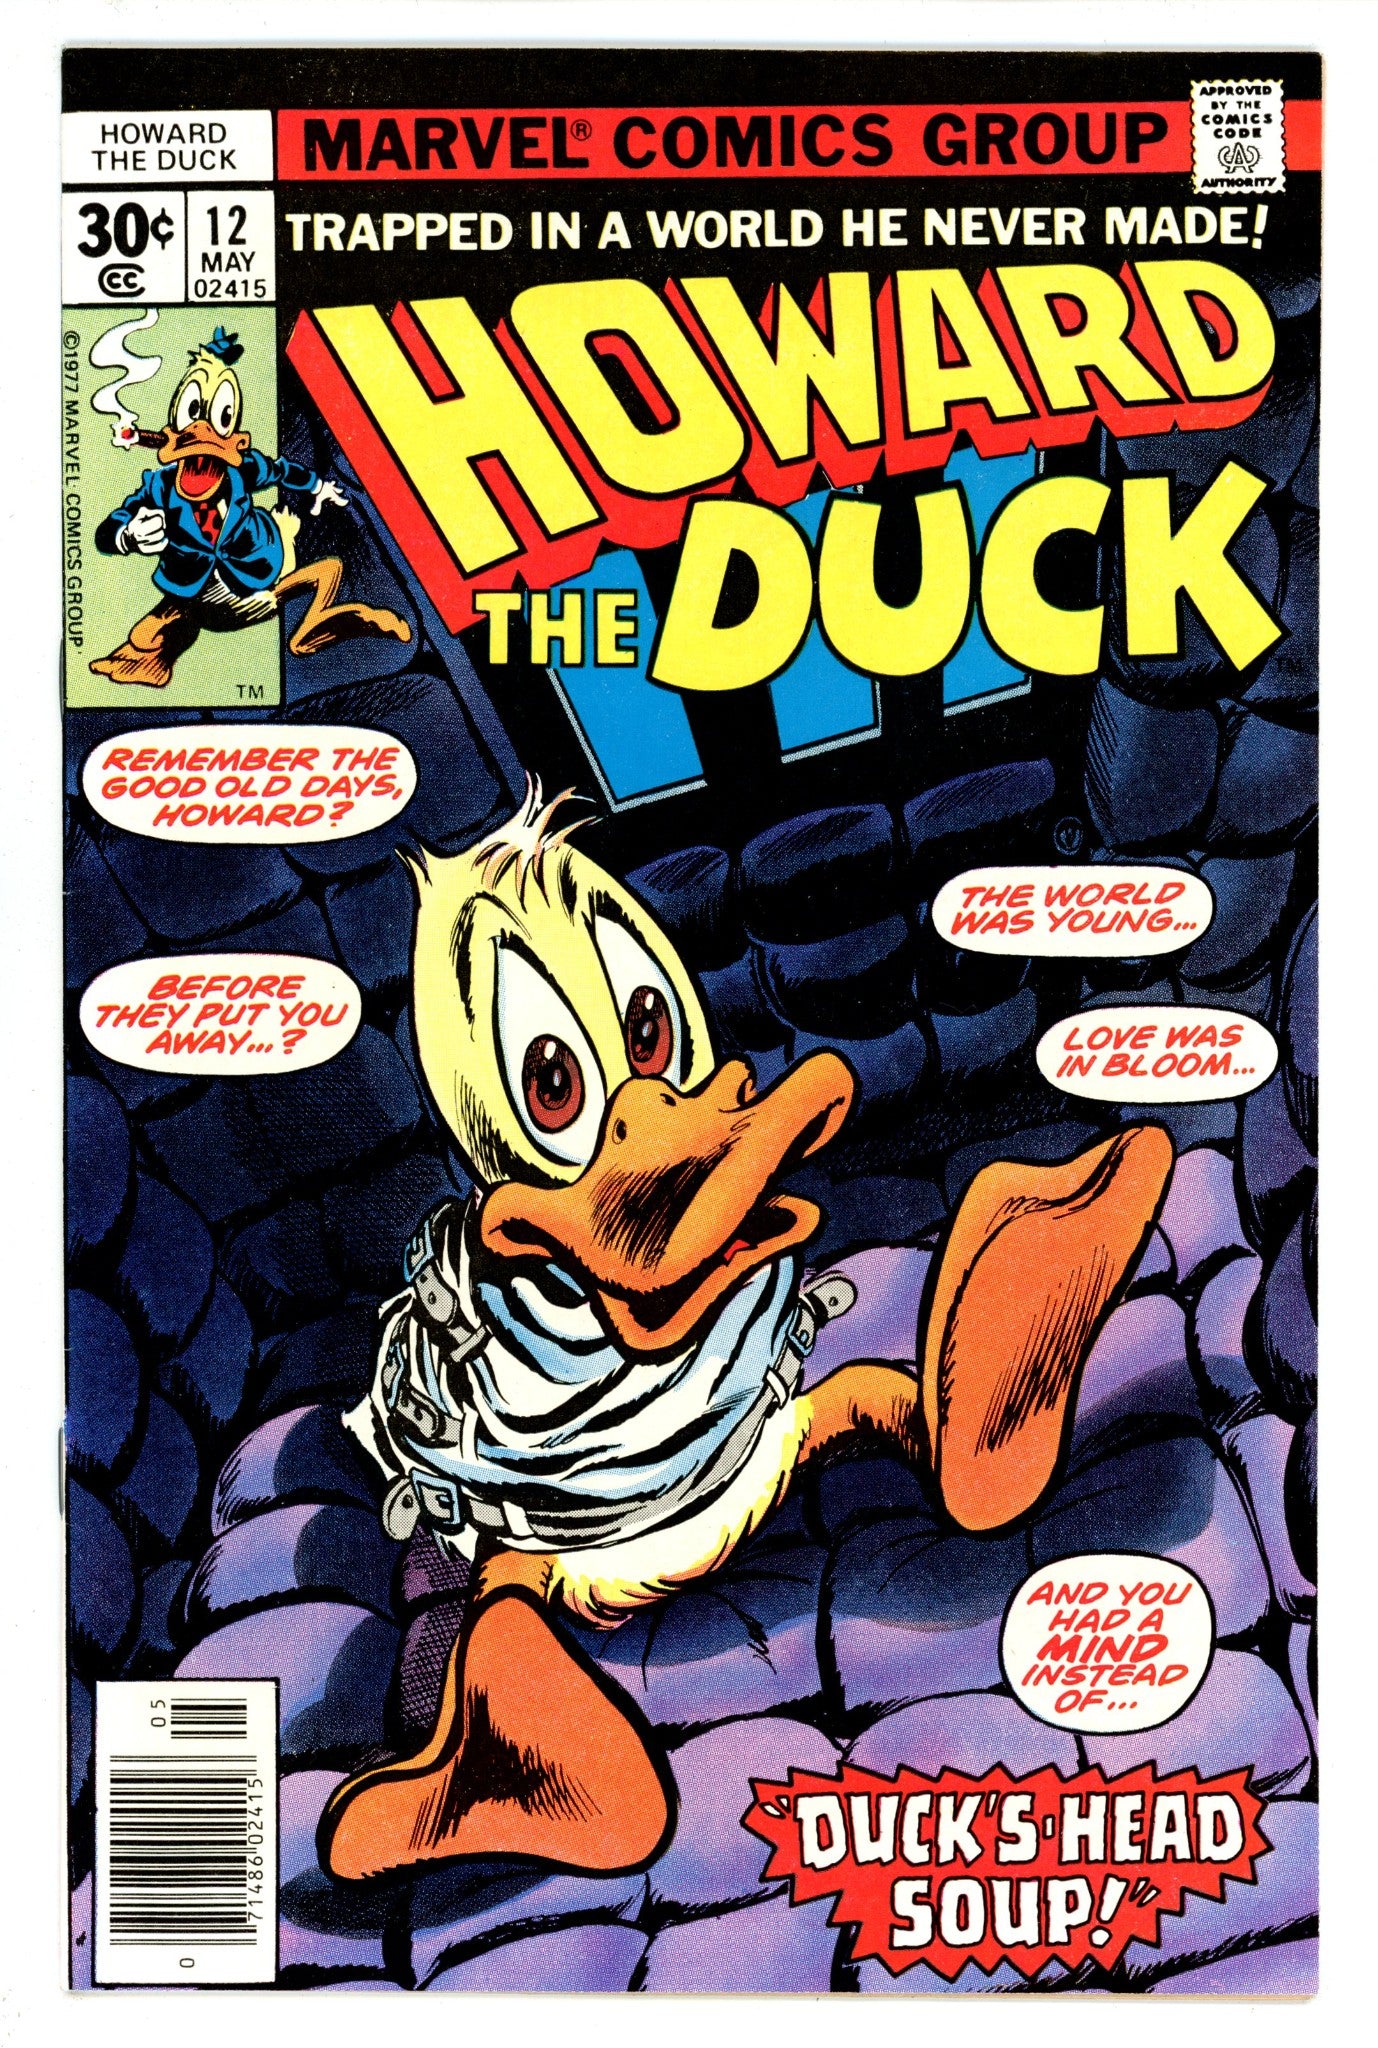 Howard the Duck Vol 1 12 VF (8.0) (1977) 